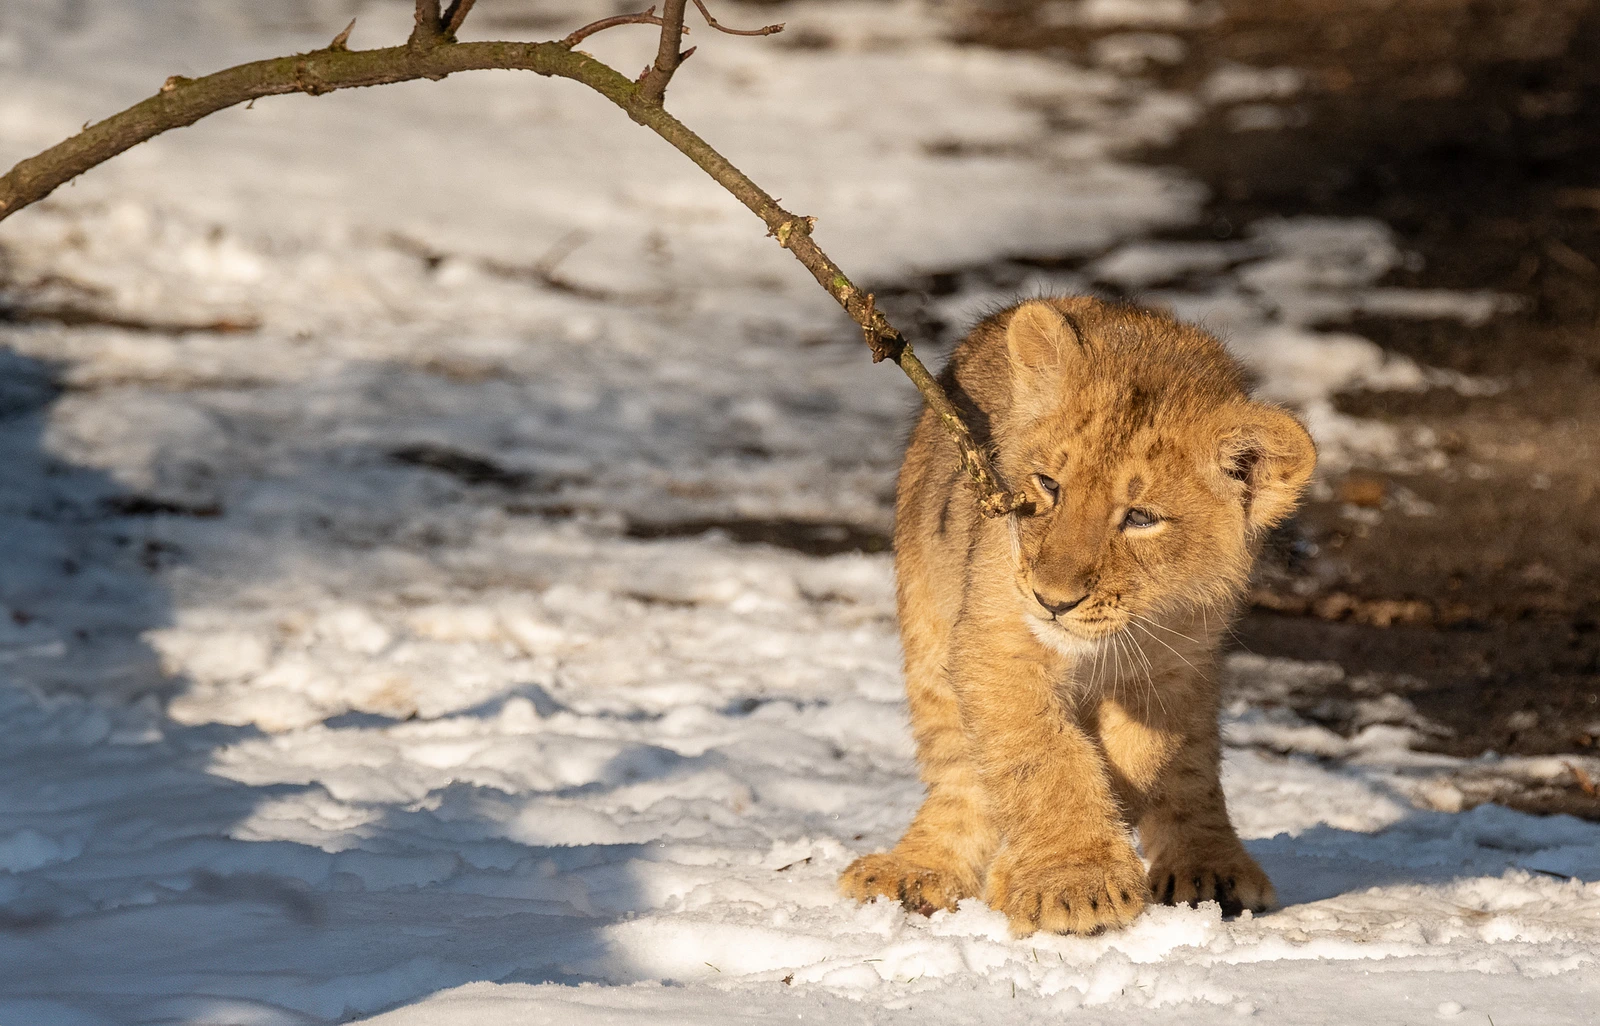 A Winter Wonderland Safari: Capturing the Magic at Zoo Planckendael with the Nikon Z50 and Sigma 150-600 Sport Lens